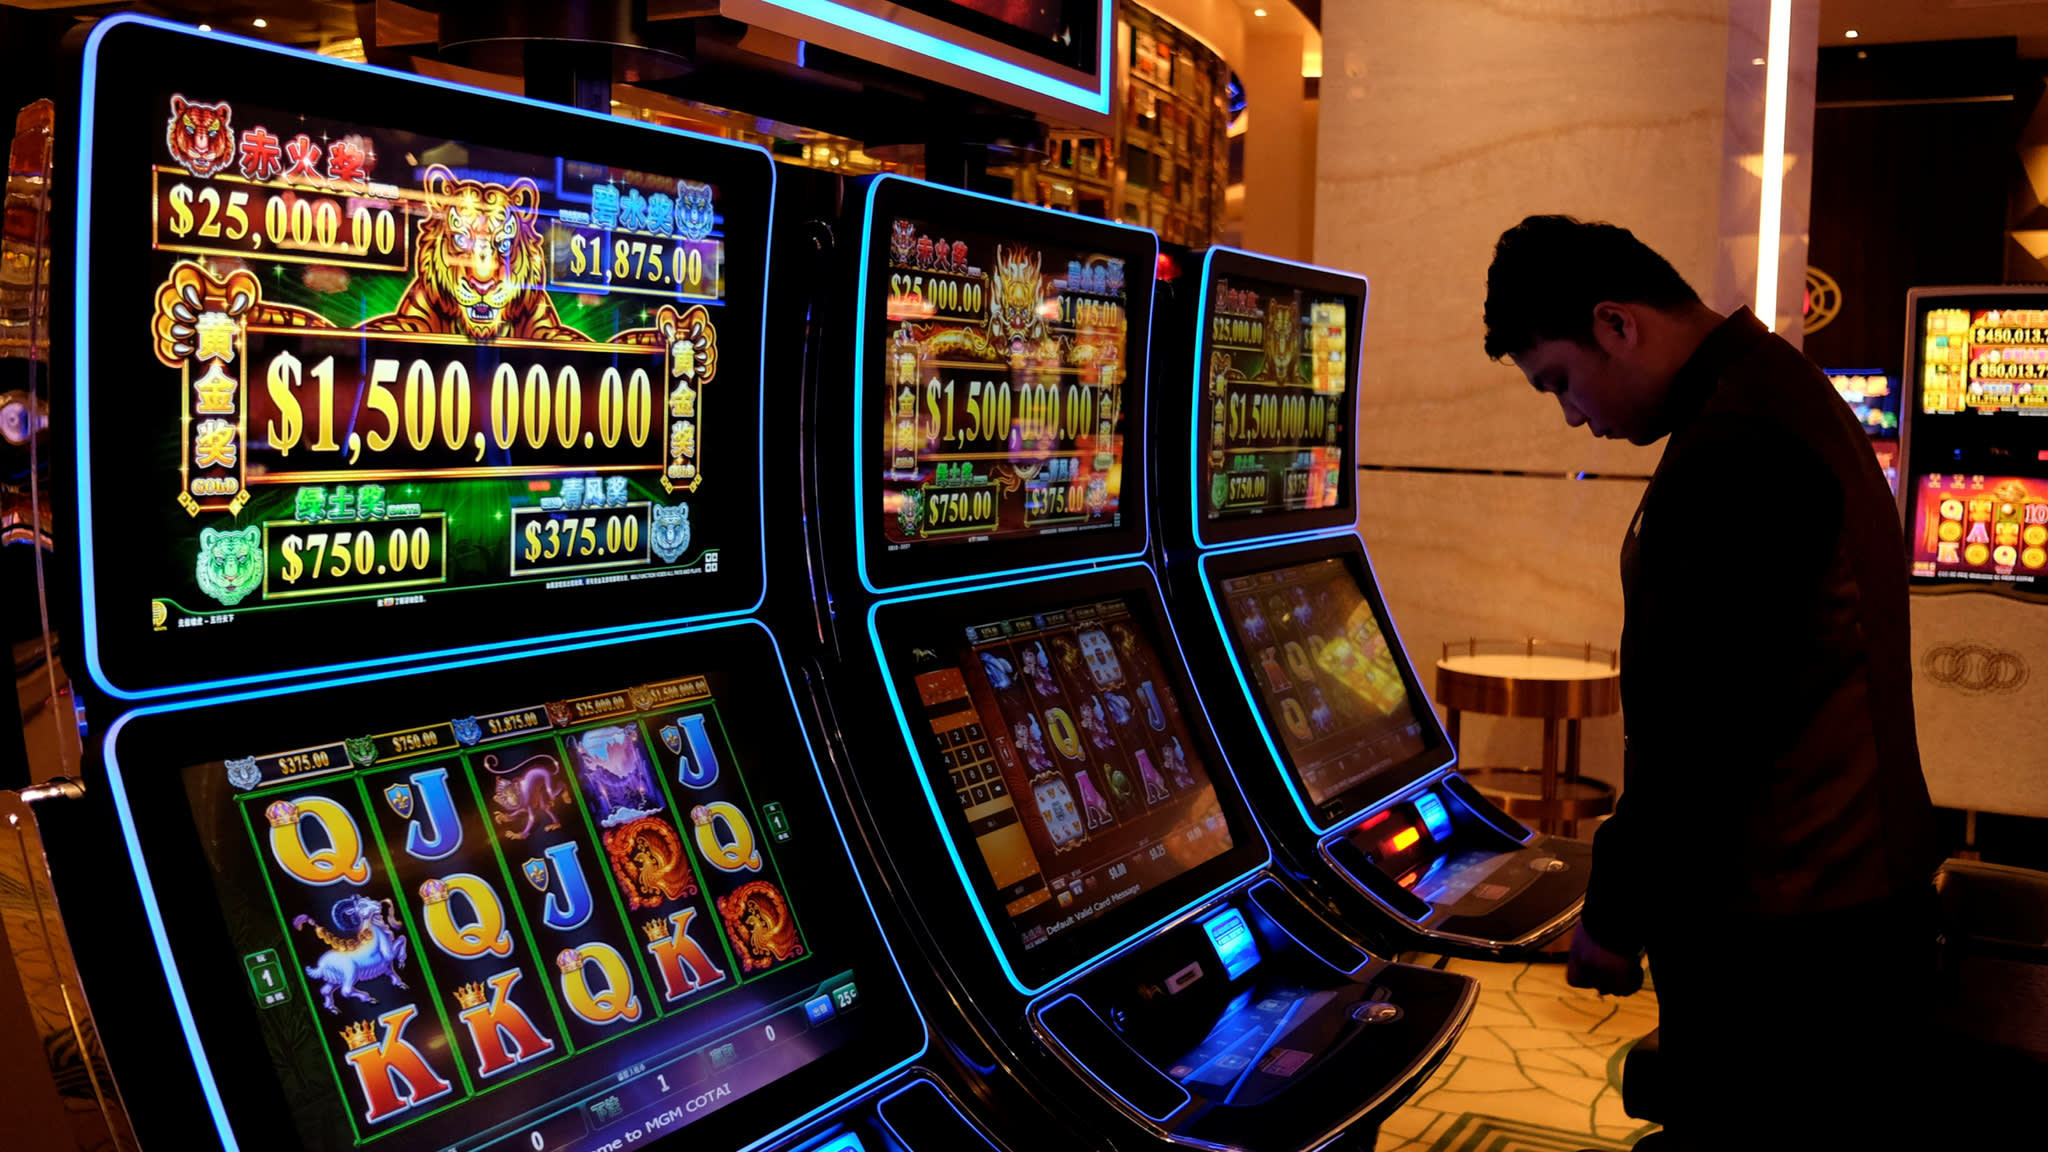 Coronavirus Could Lead To $21 Billion In Economic Losses to The Casino Industry